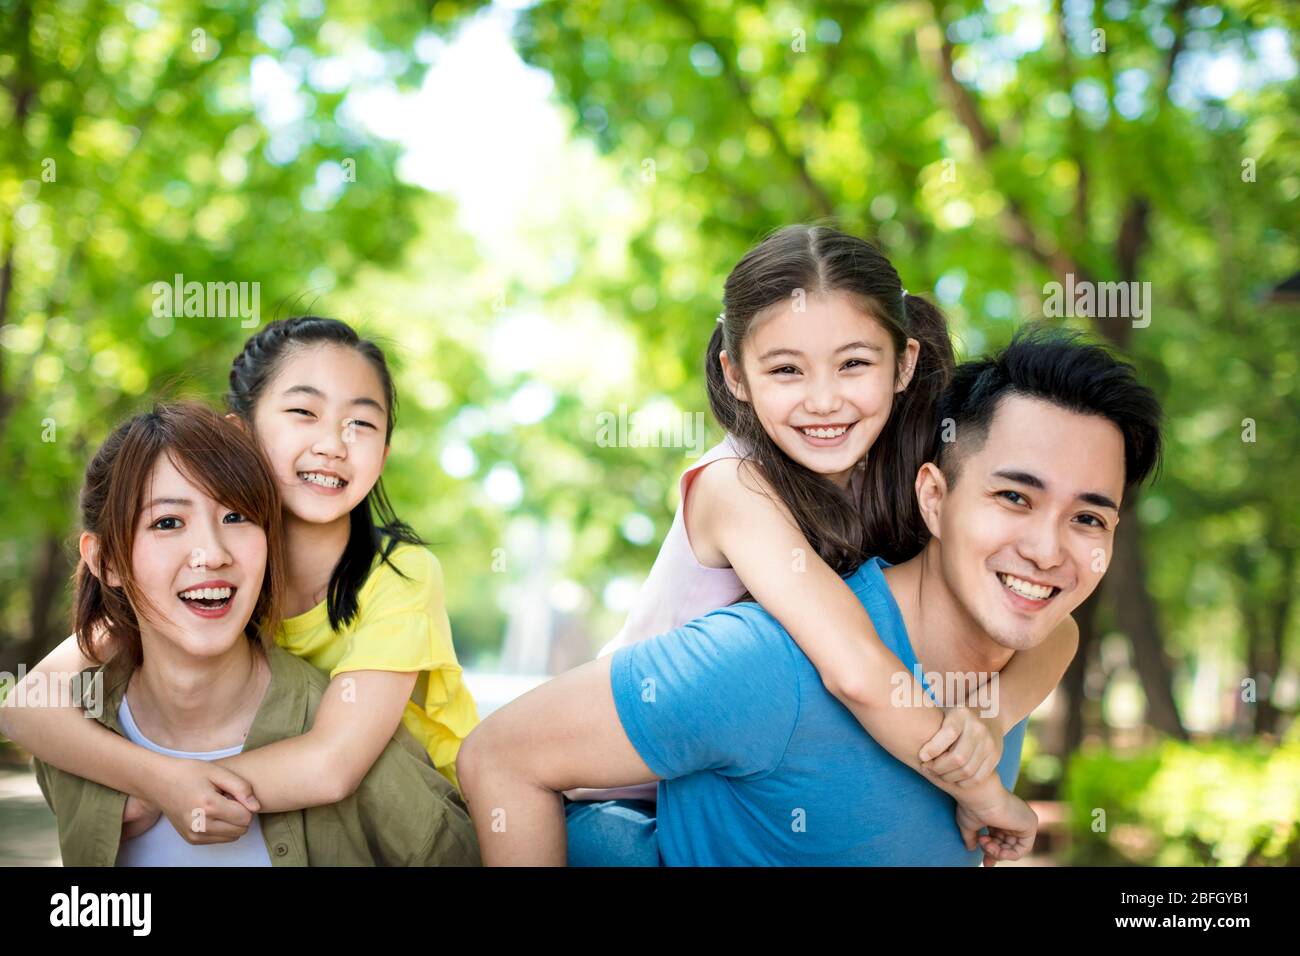 happy young family having fun outdoors Stock Photo